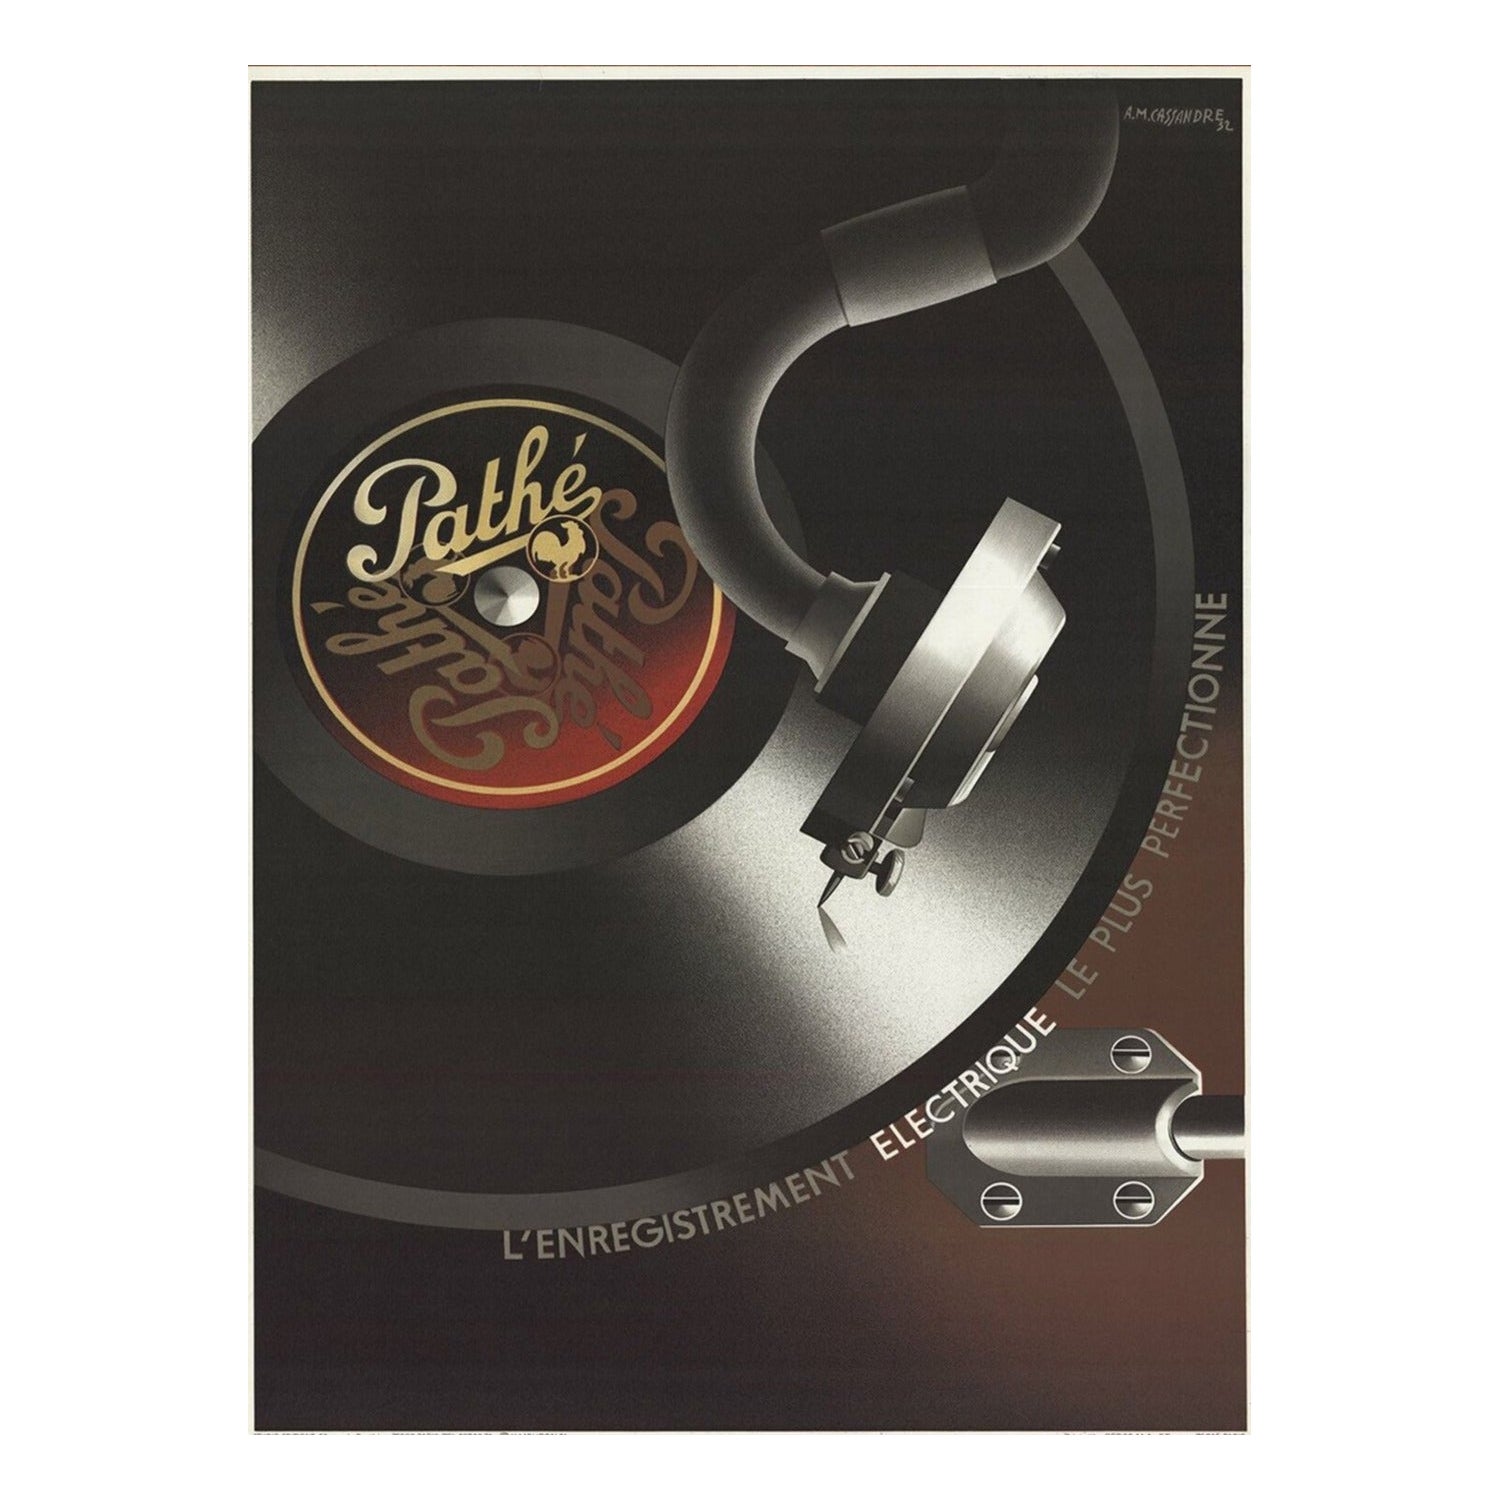 1981 Pathe Record Player, Original-Vintage-Poster